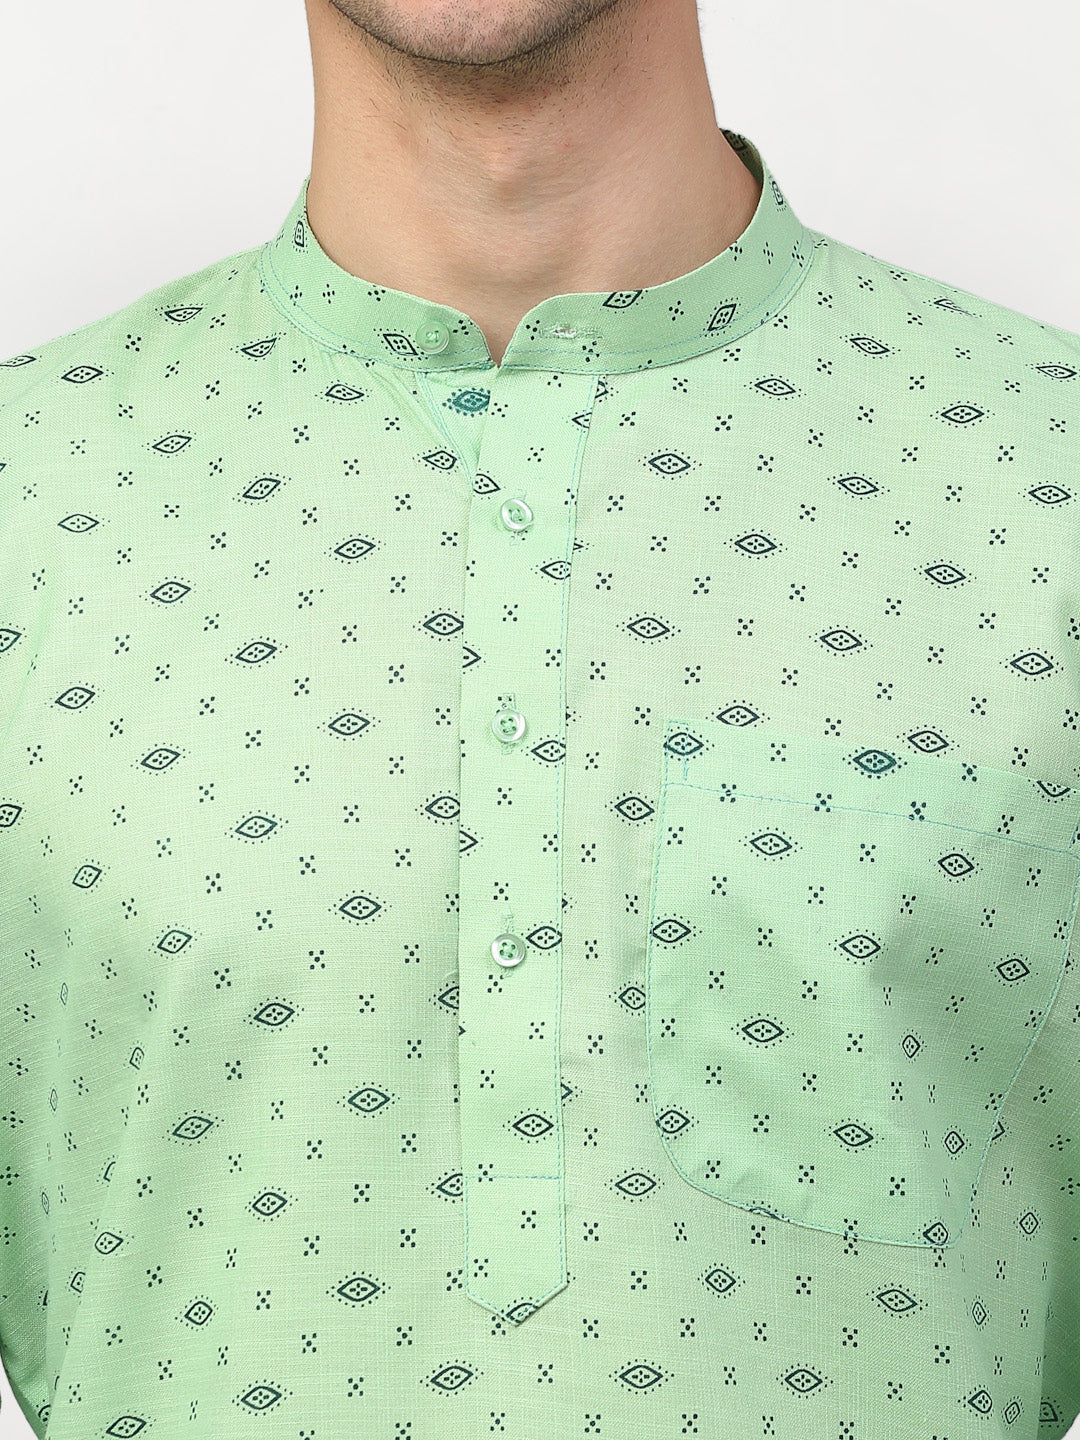 Jompers Men's Green Printed Cotton Kurta Payjama Sets